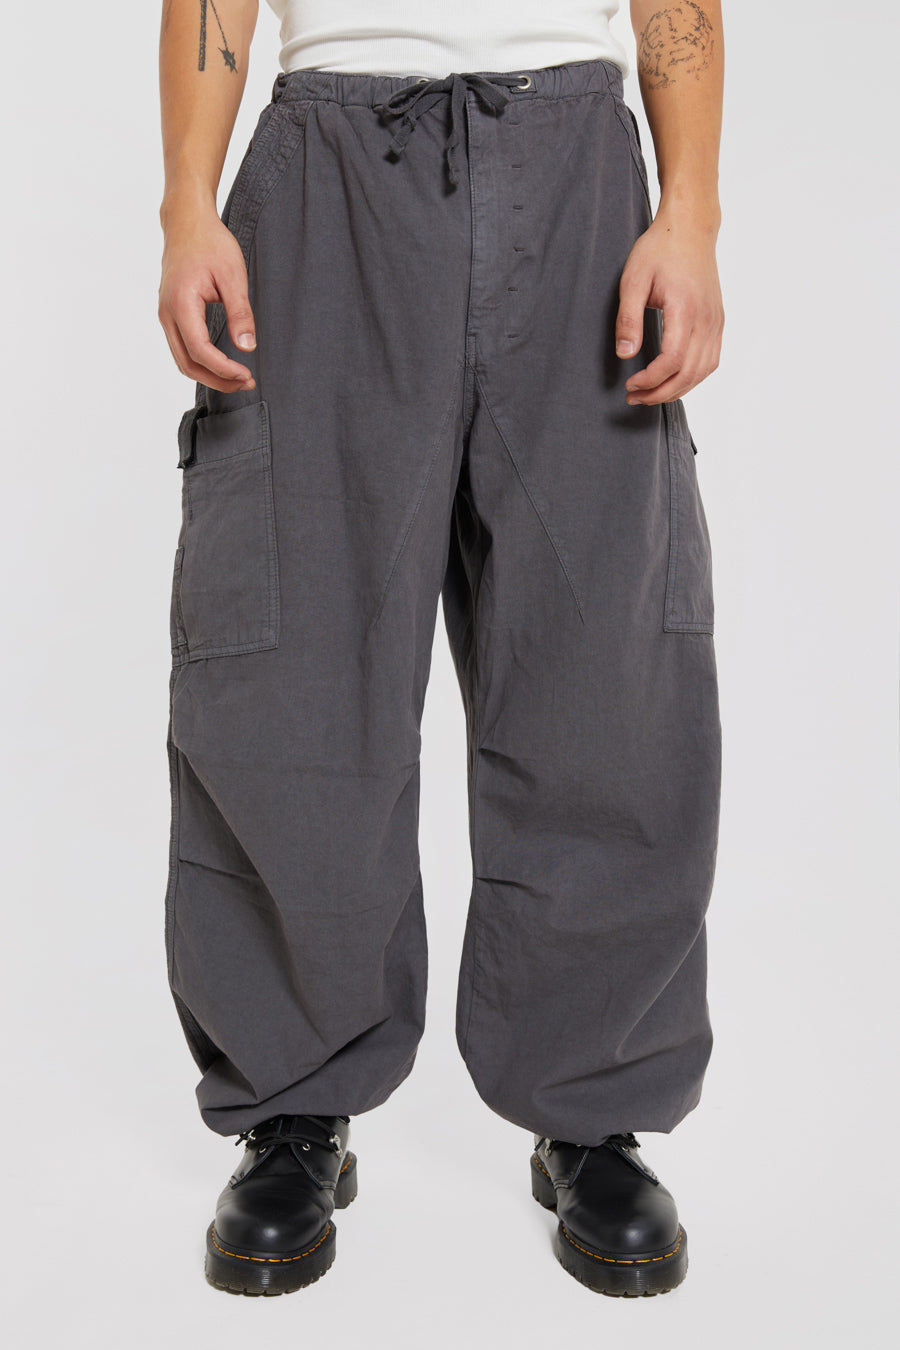 Weekday Juni oversized parachute pants in metallic dark gray